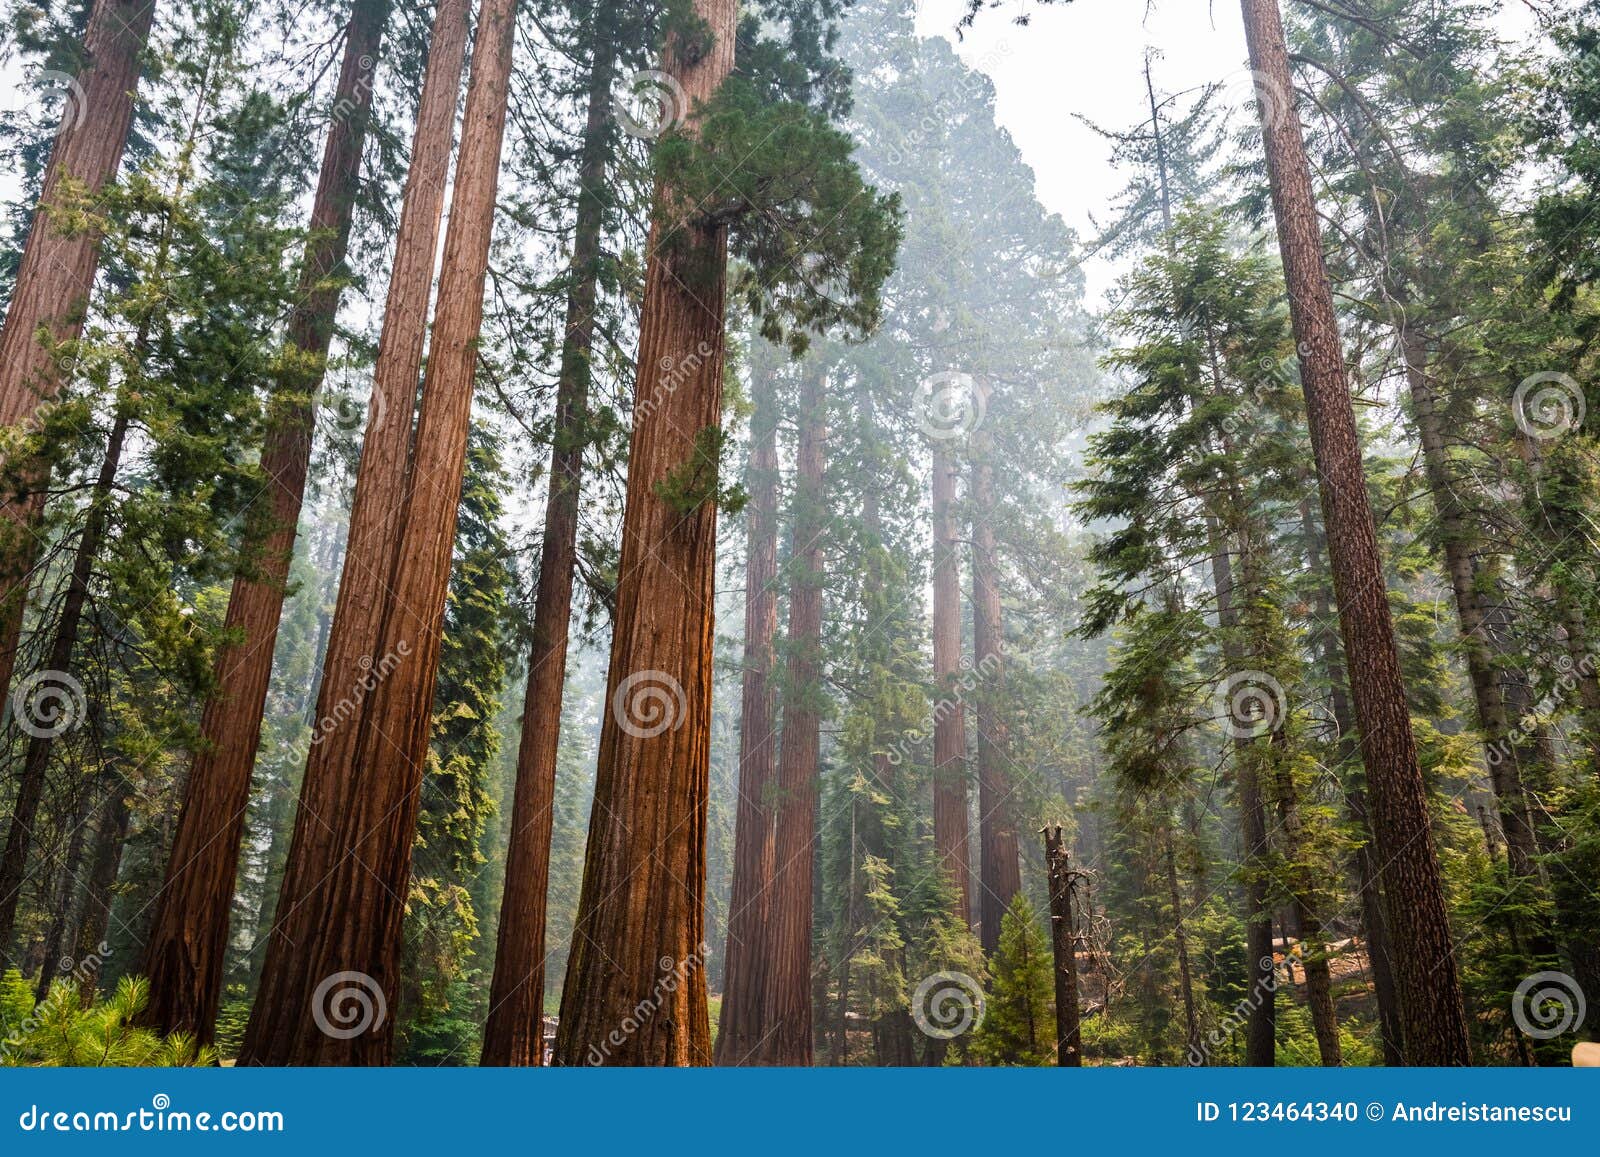 giant sequoia trees in mariposa grove, yosemite national park